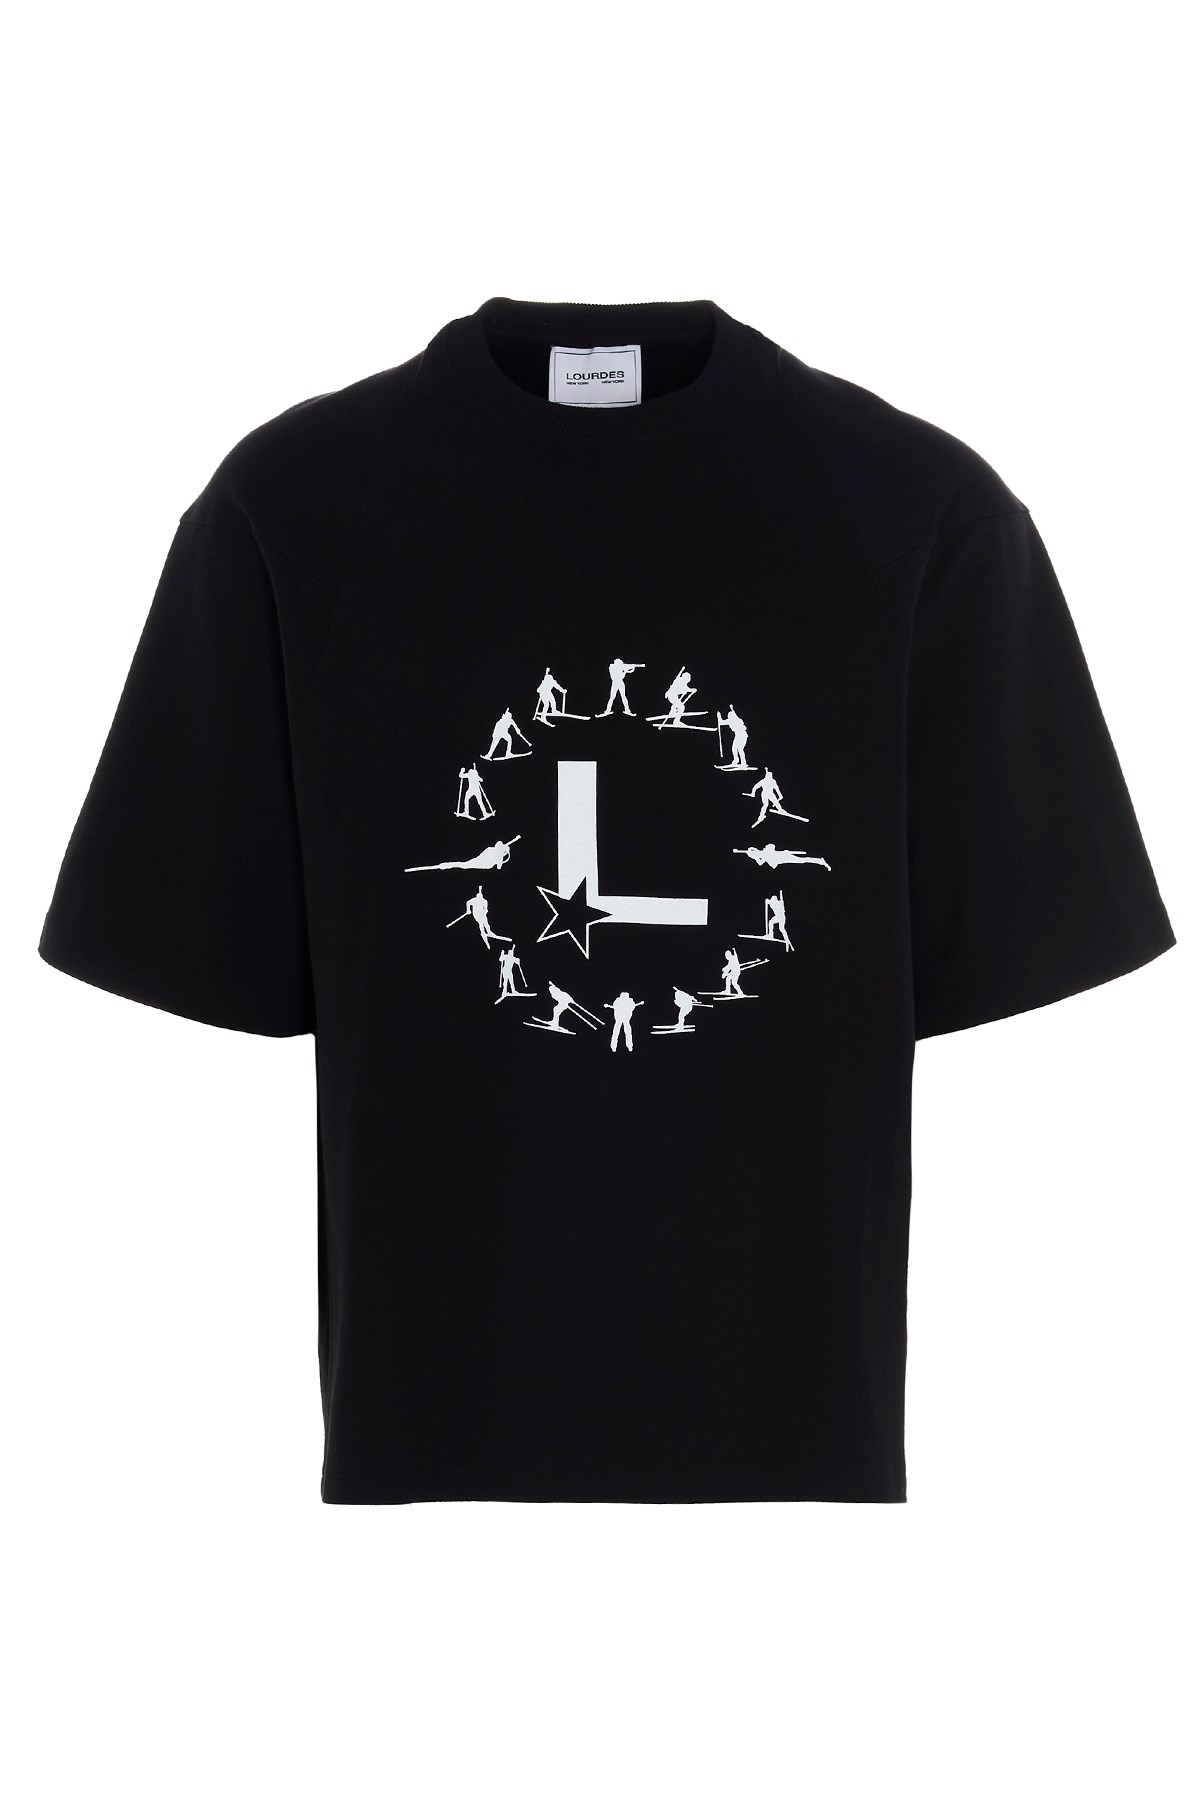 LOURDES NEW YORK Logo Printed T-Shirt